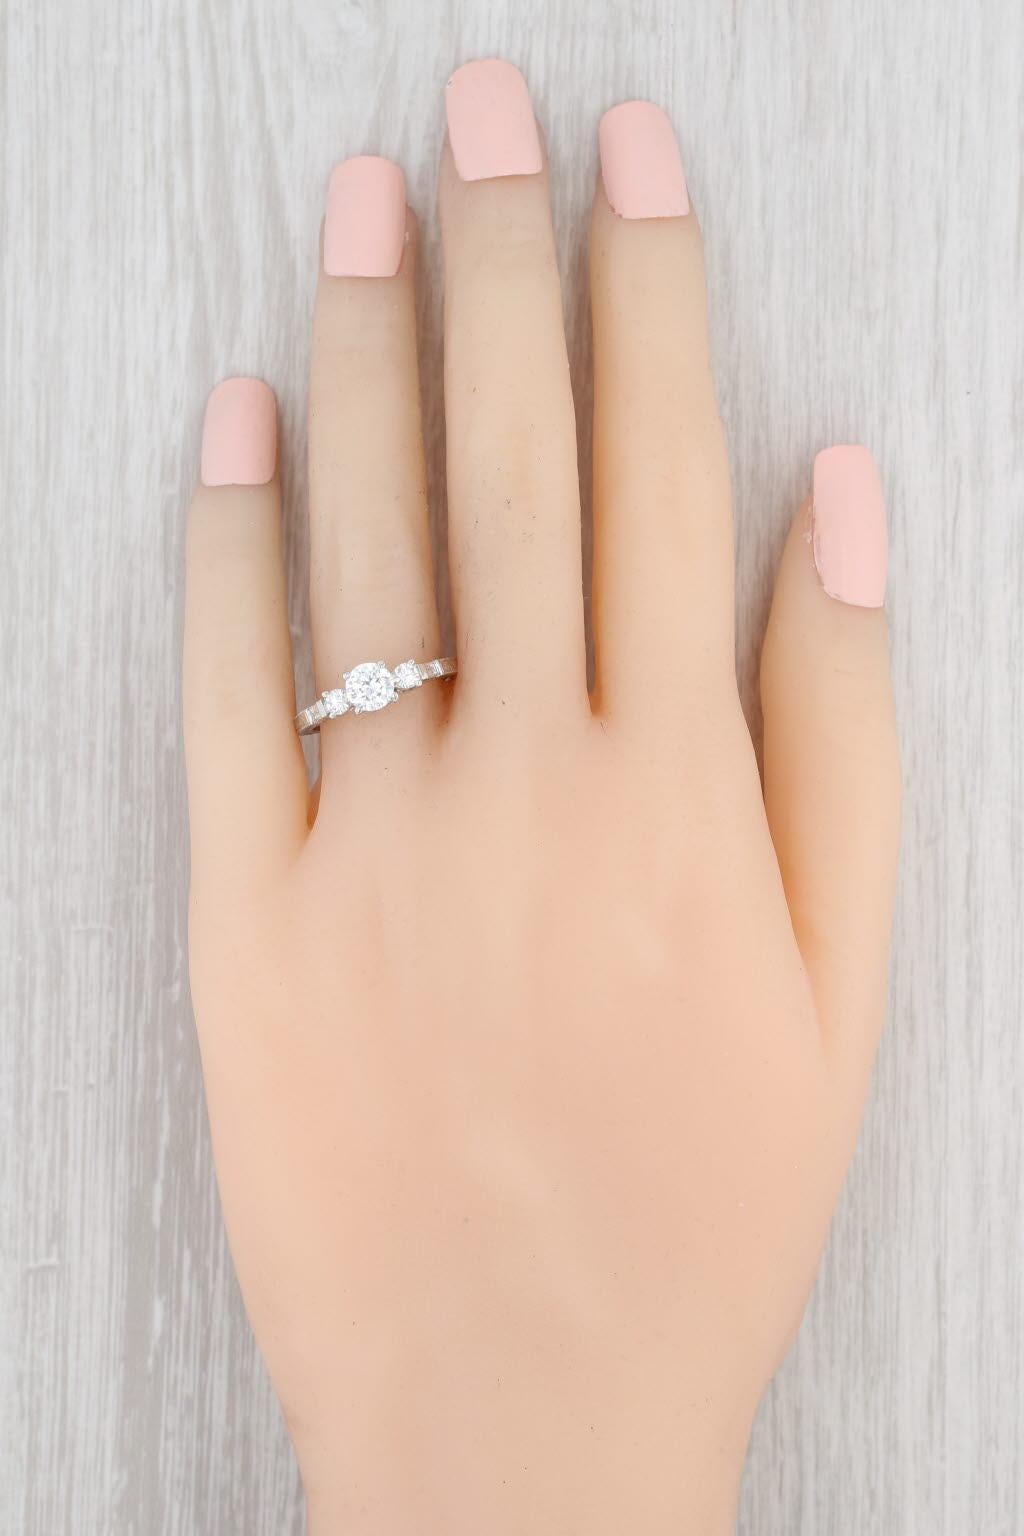 New Tacori 3 Stone Engagement Ring Platinum Size 6.5 Semi Mount Heart 10936 For Sale 1